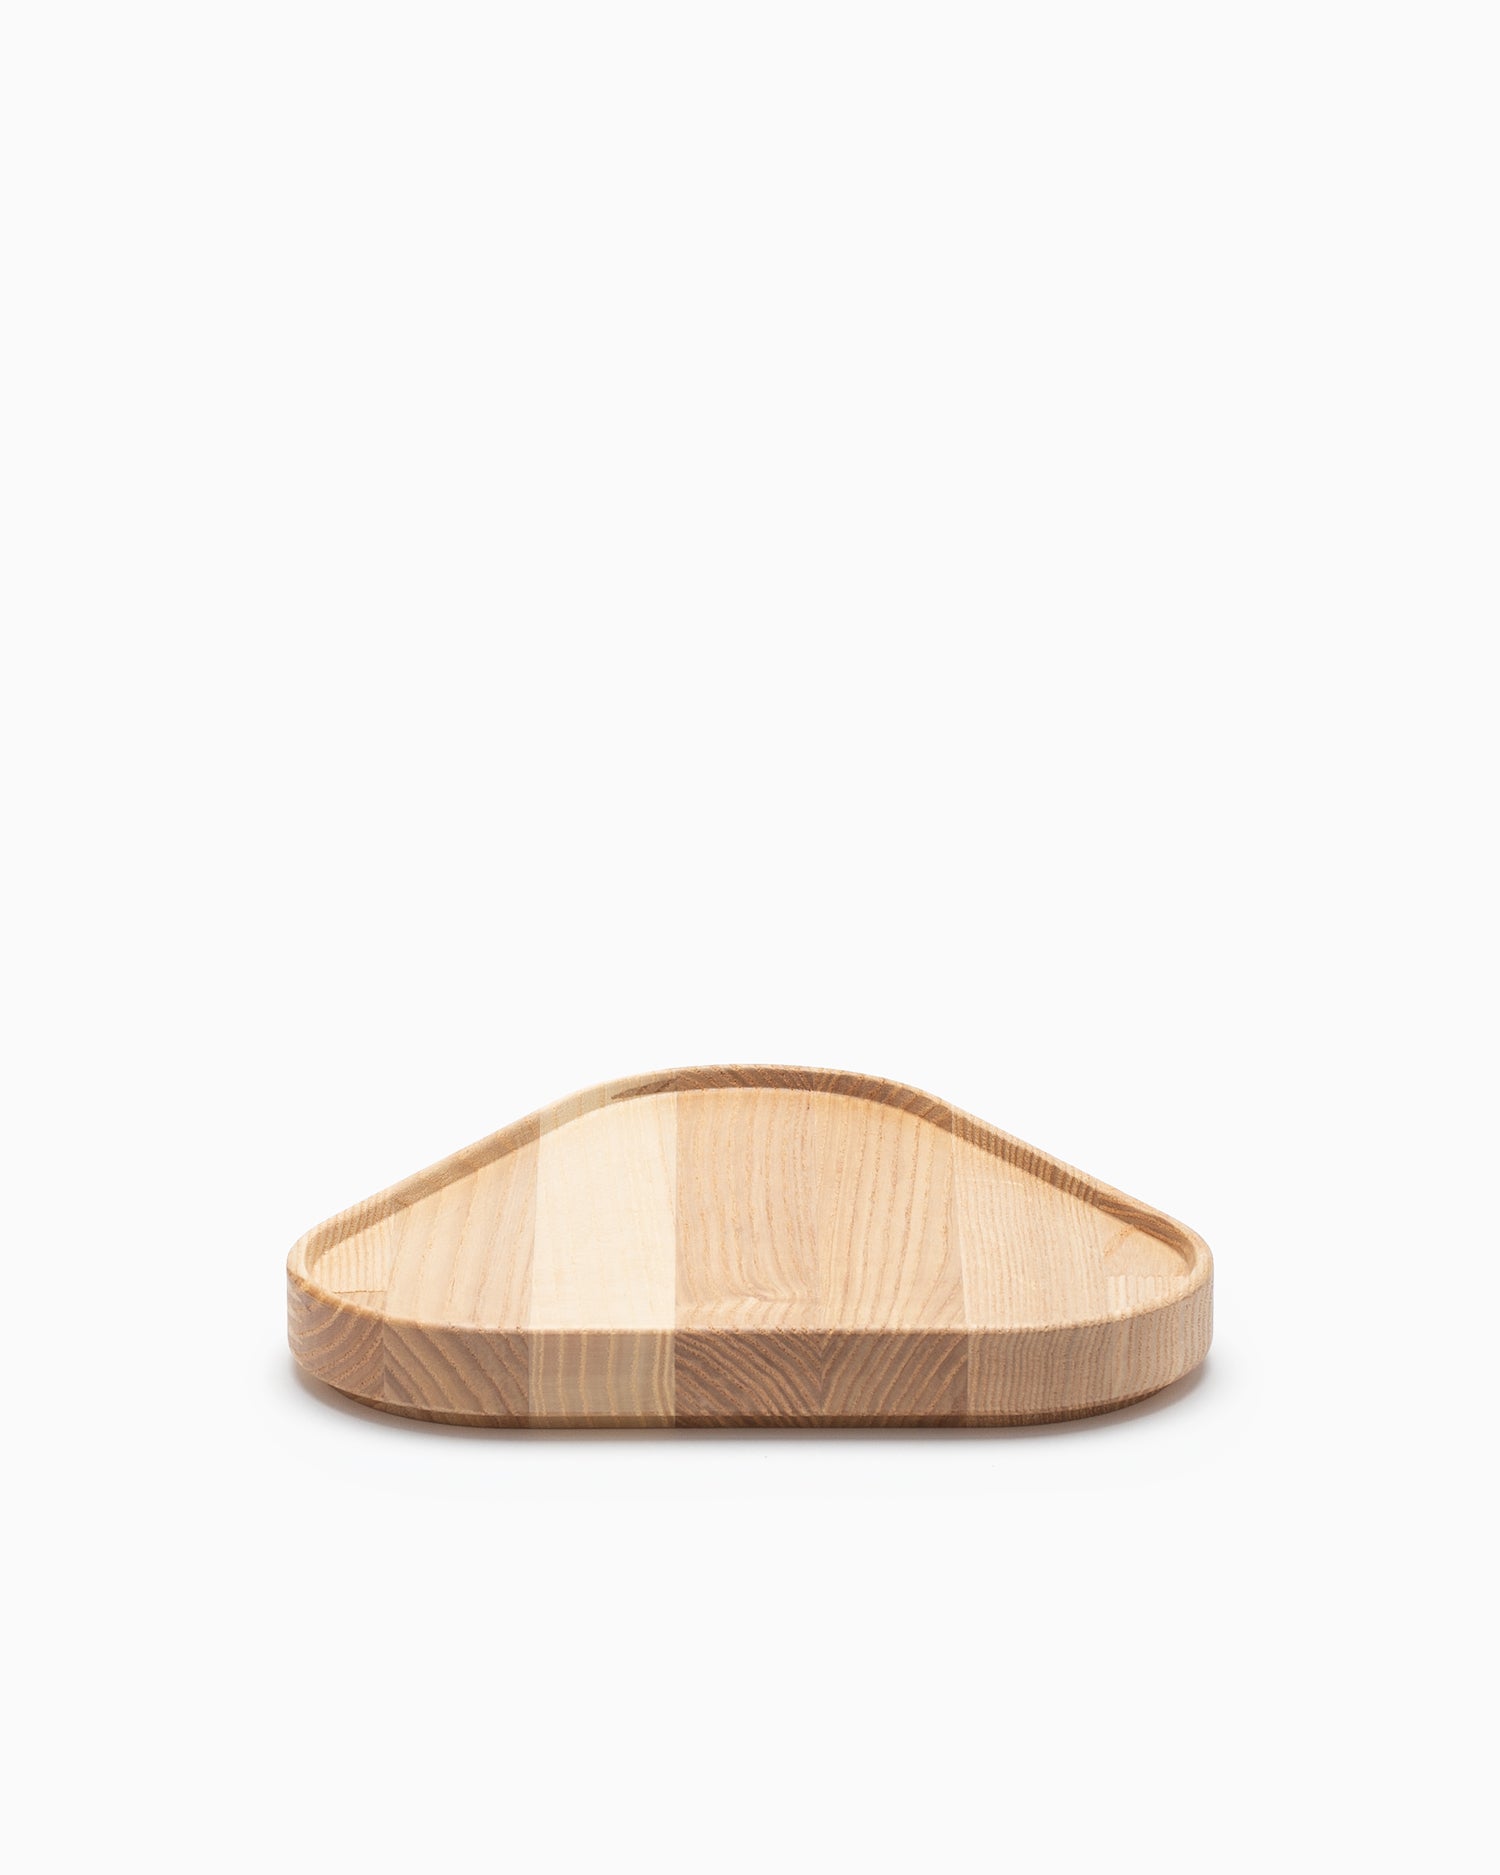 HP036 Ash Wooden Tray